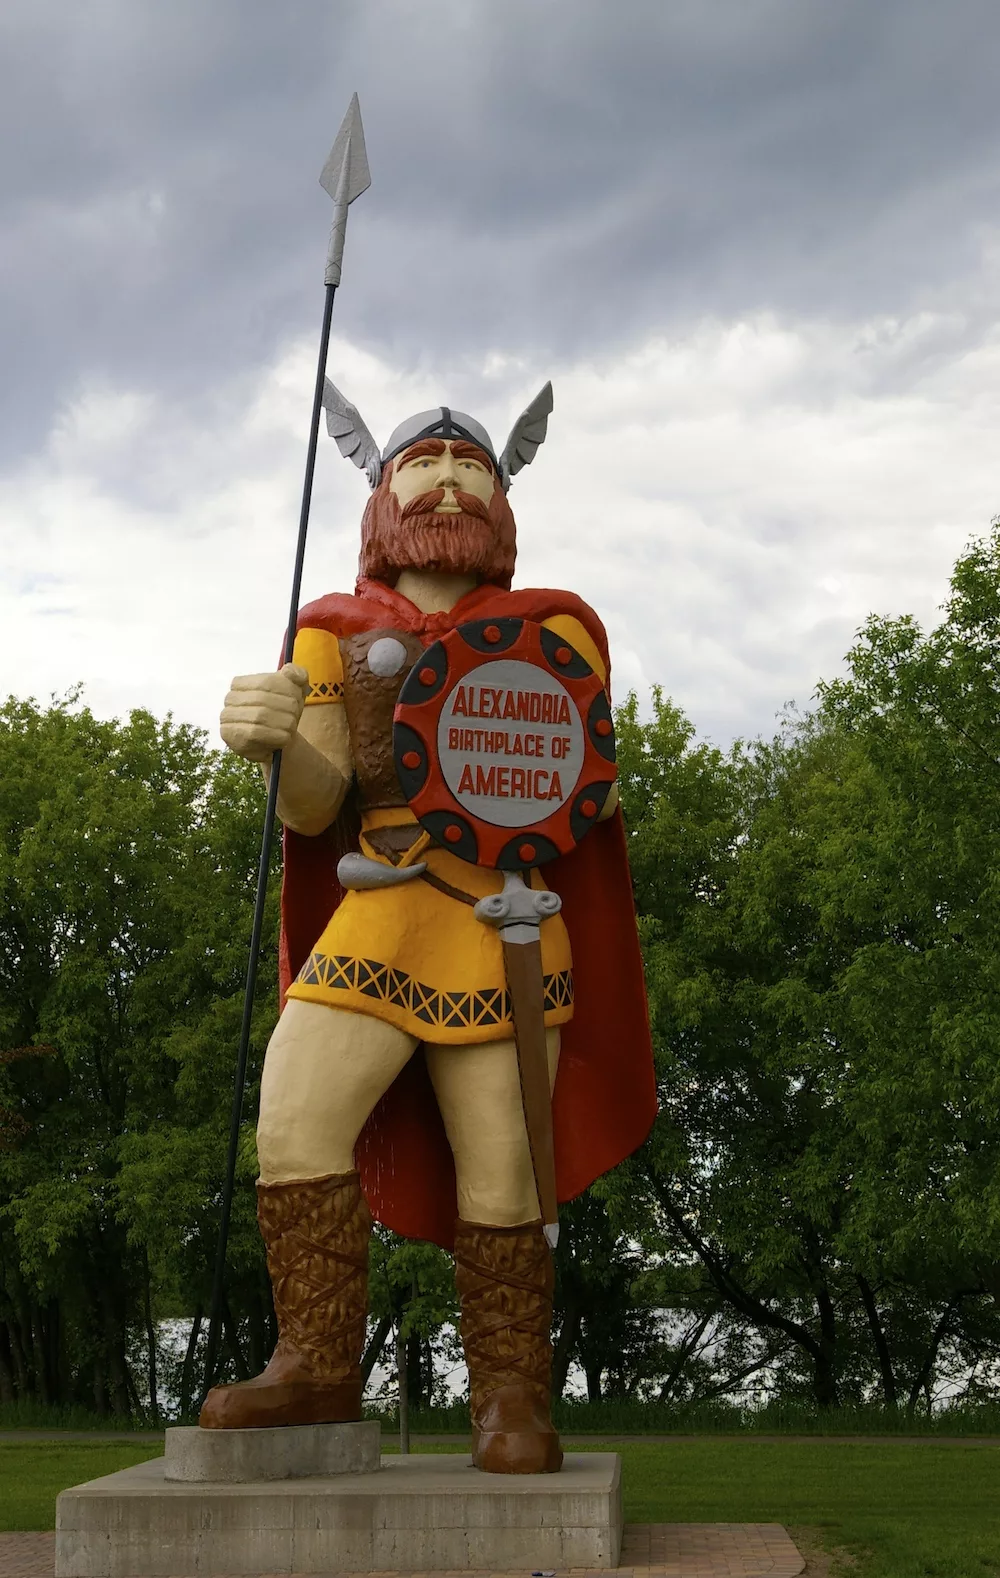 Big Ole, America's Biggest Viking in Alexandria, Minnesota